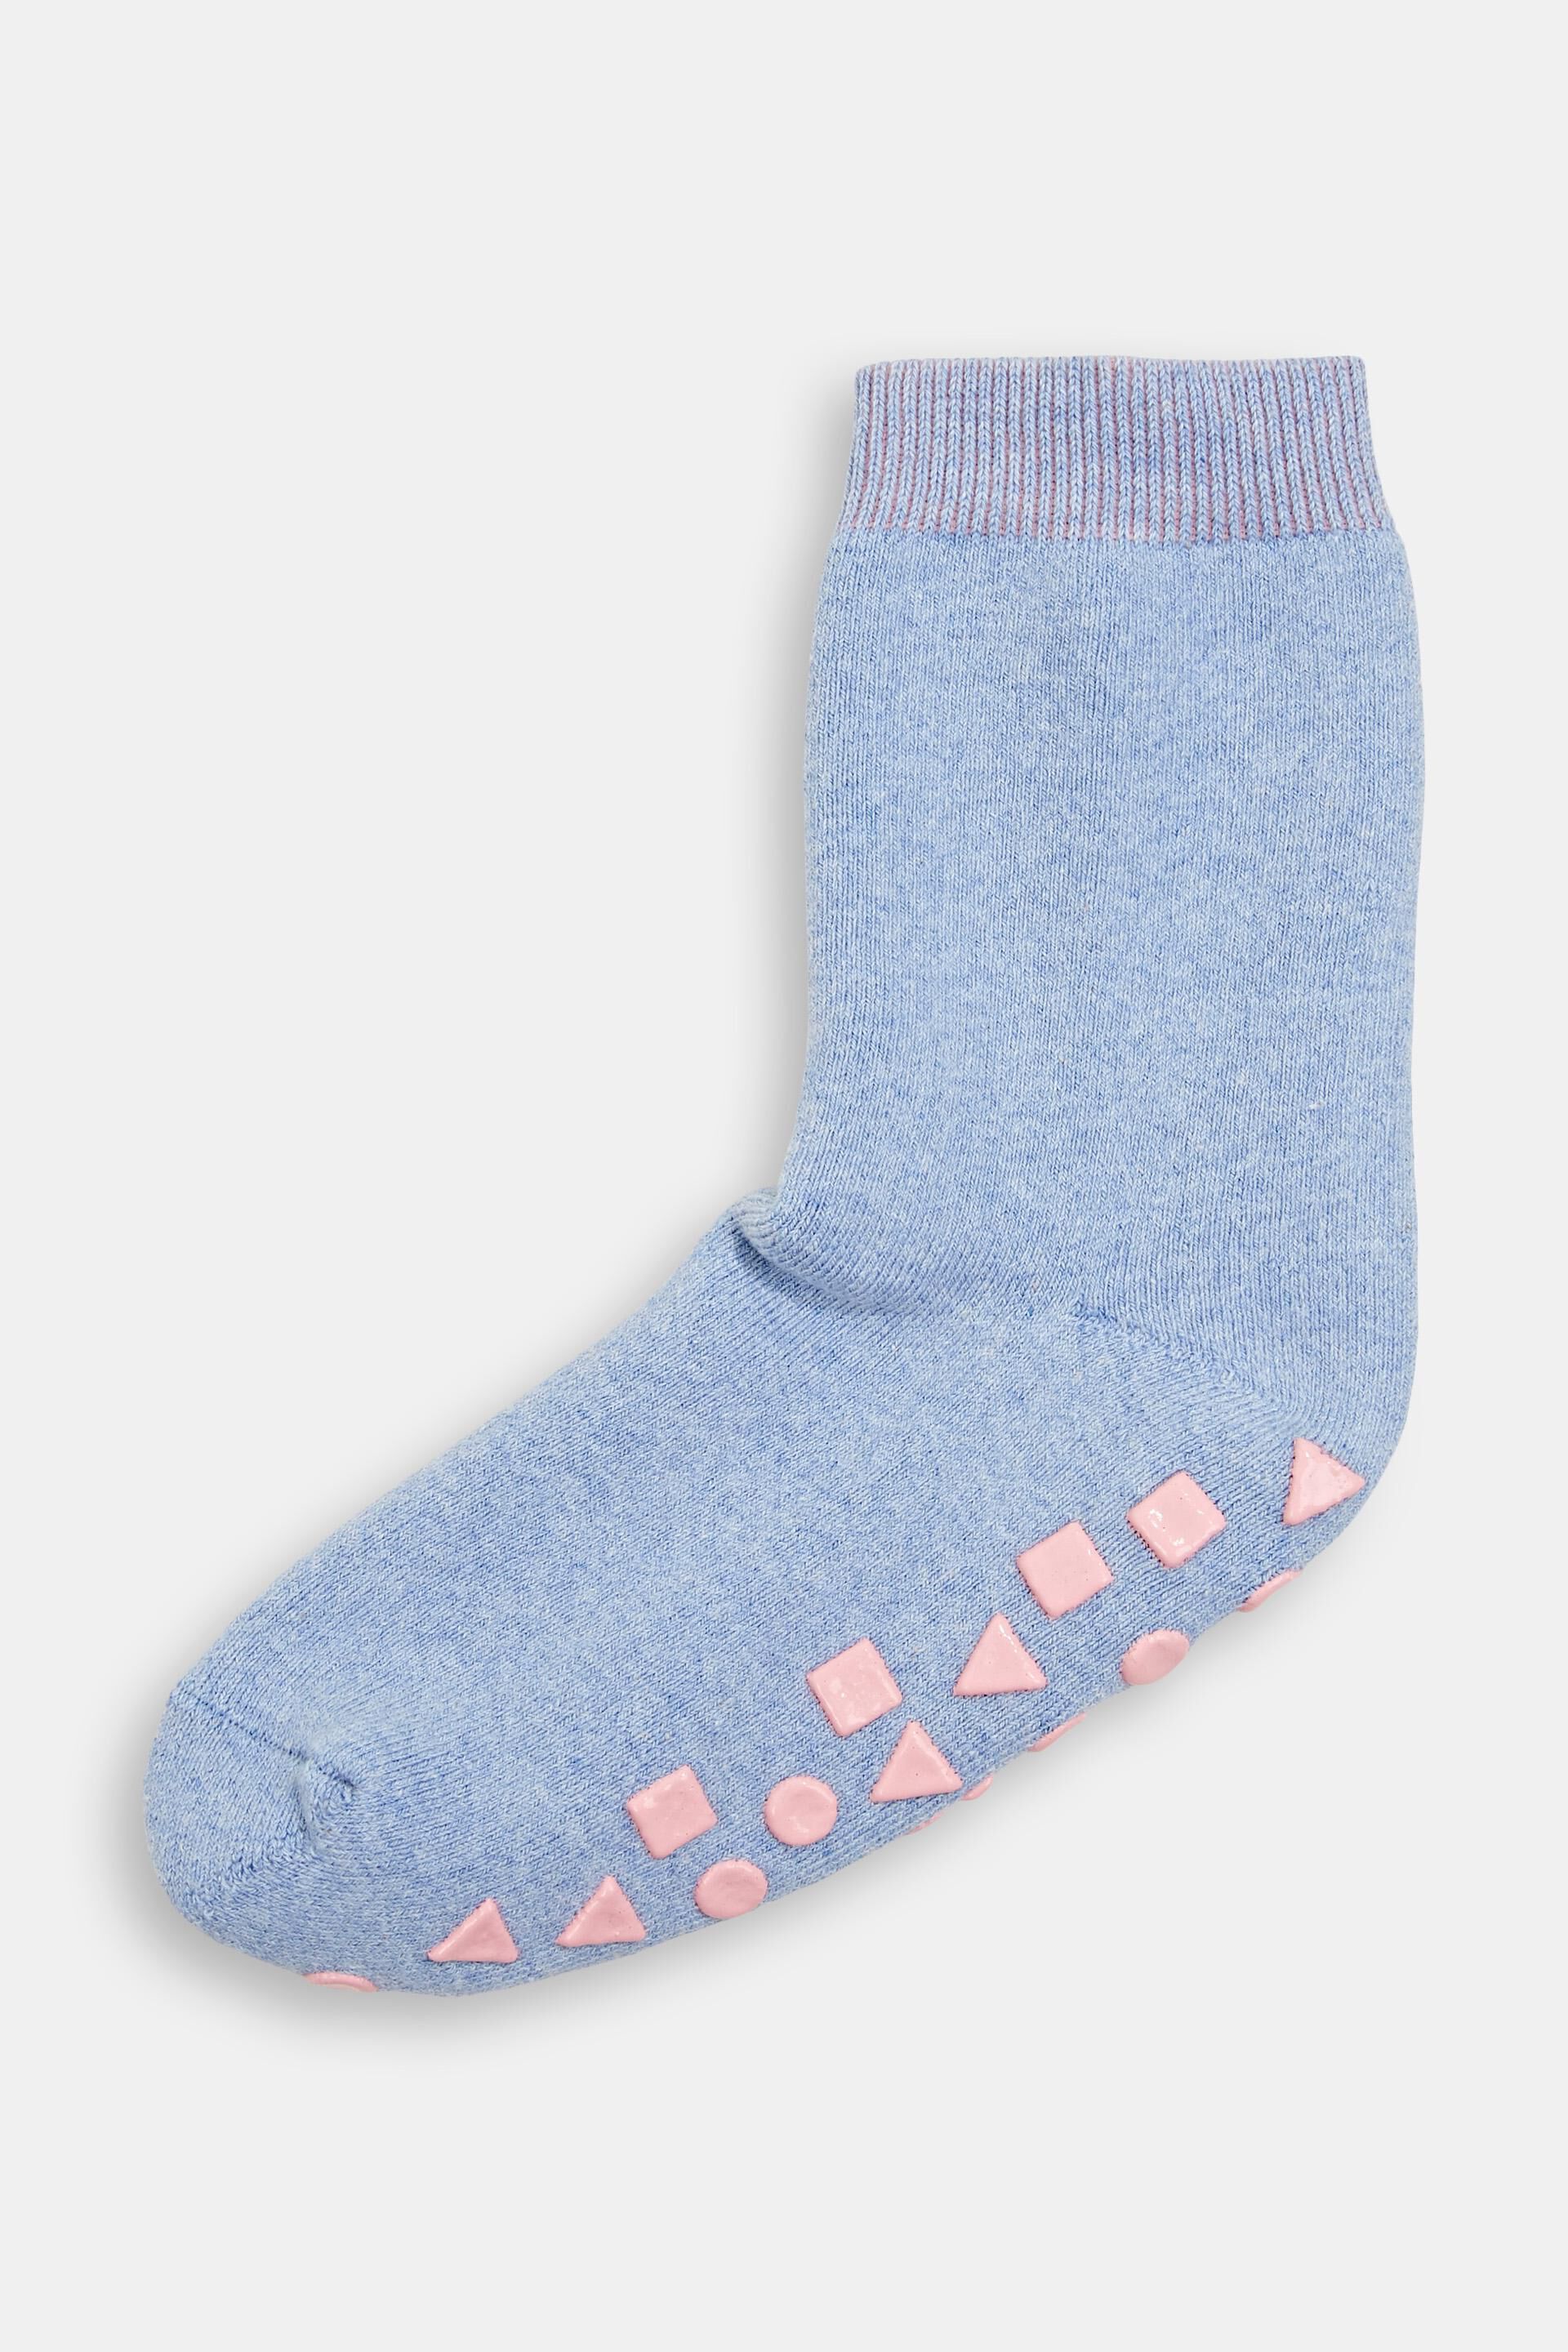 Esprit Outlet Non-slip socks made of blended organic cotton